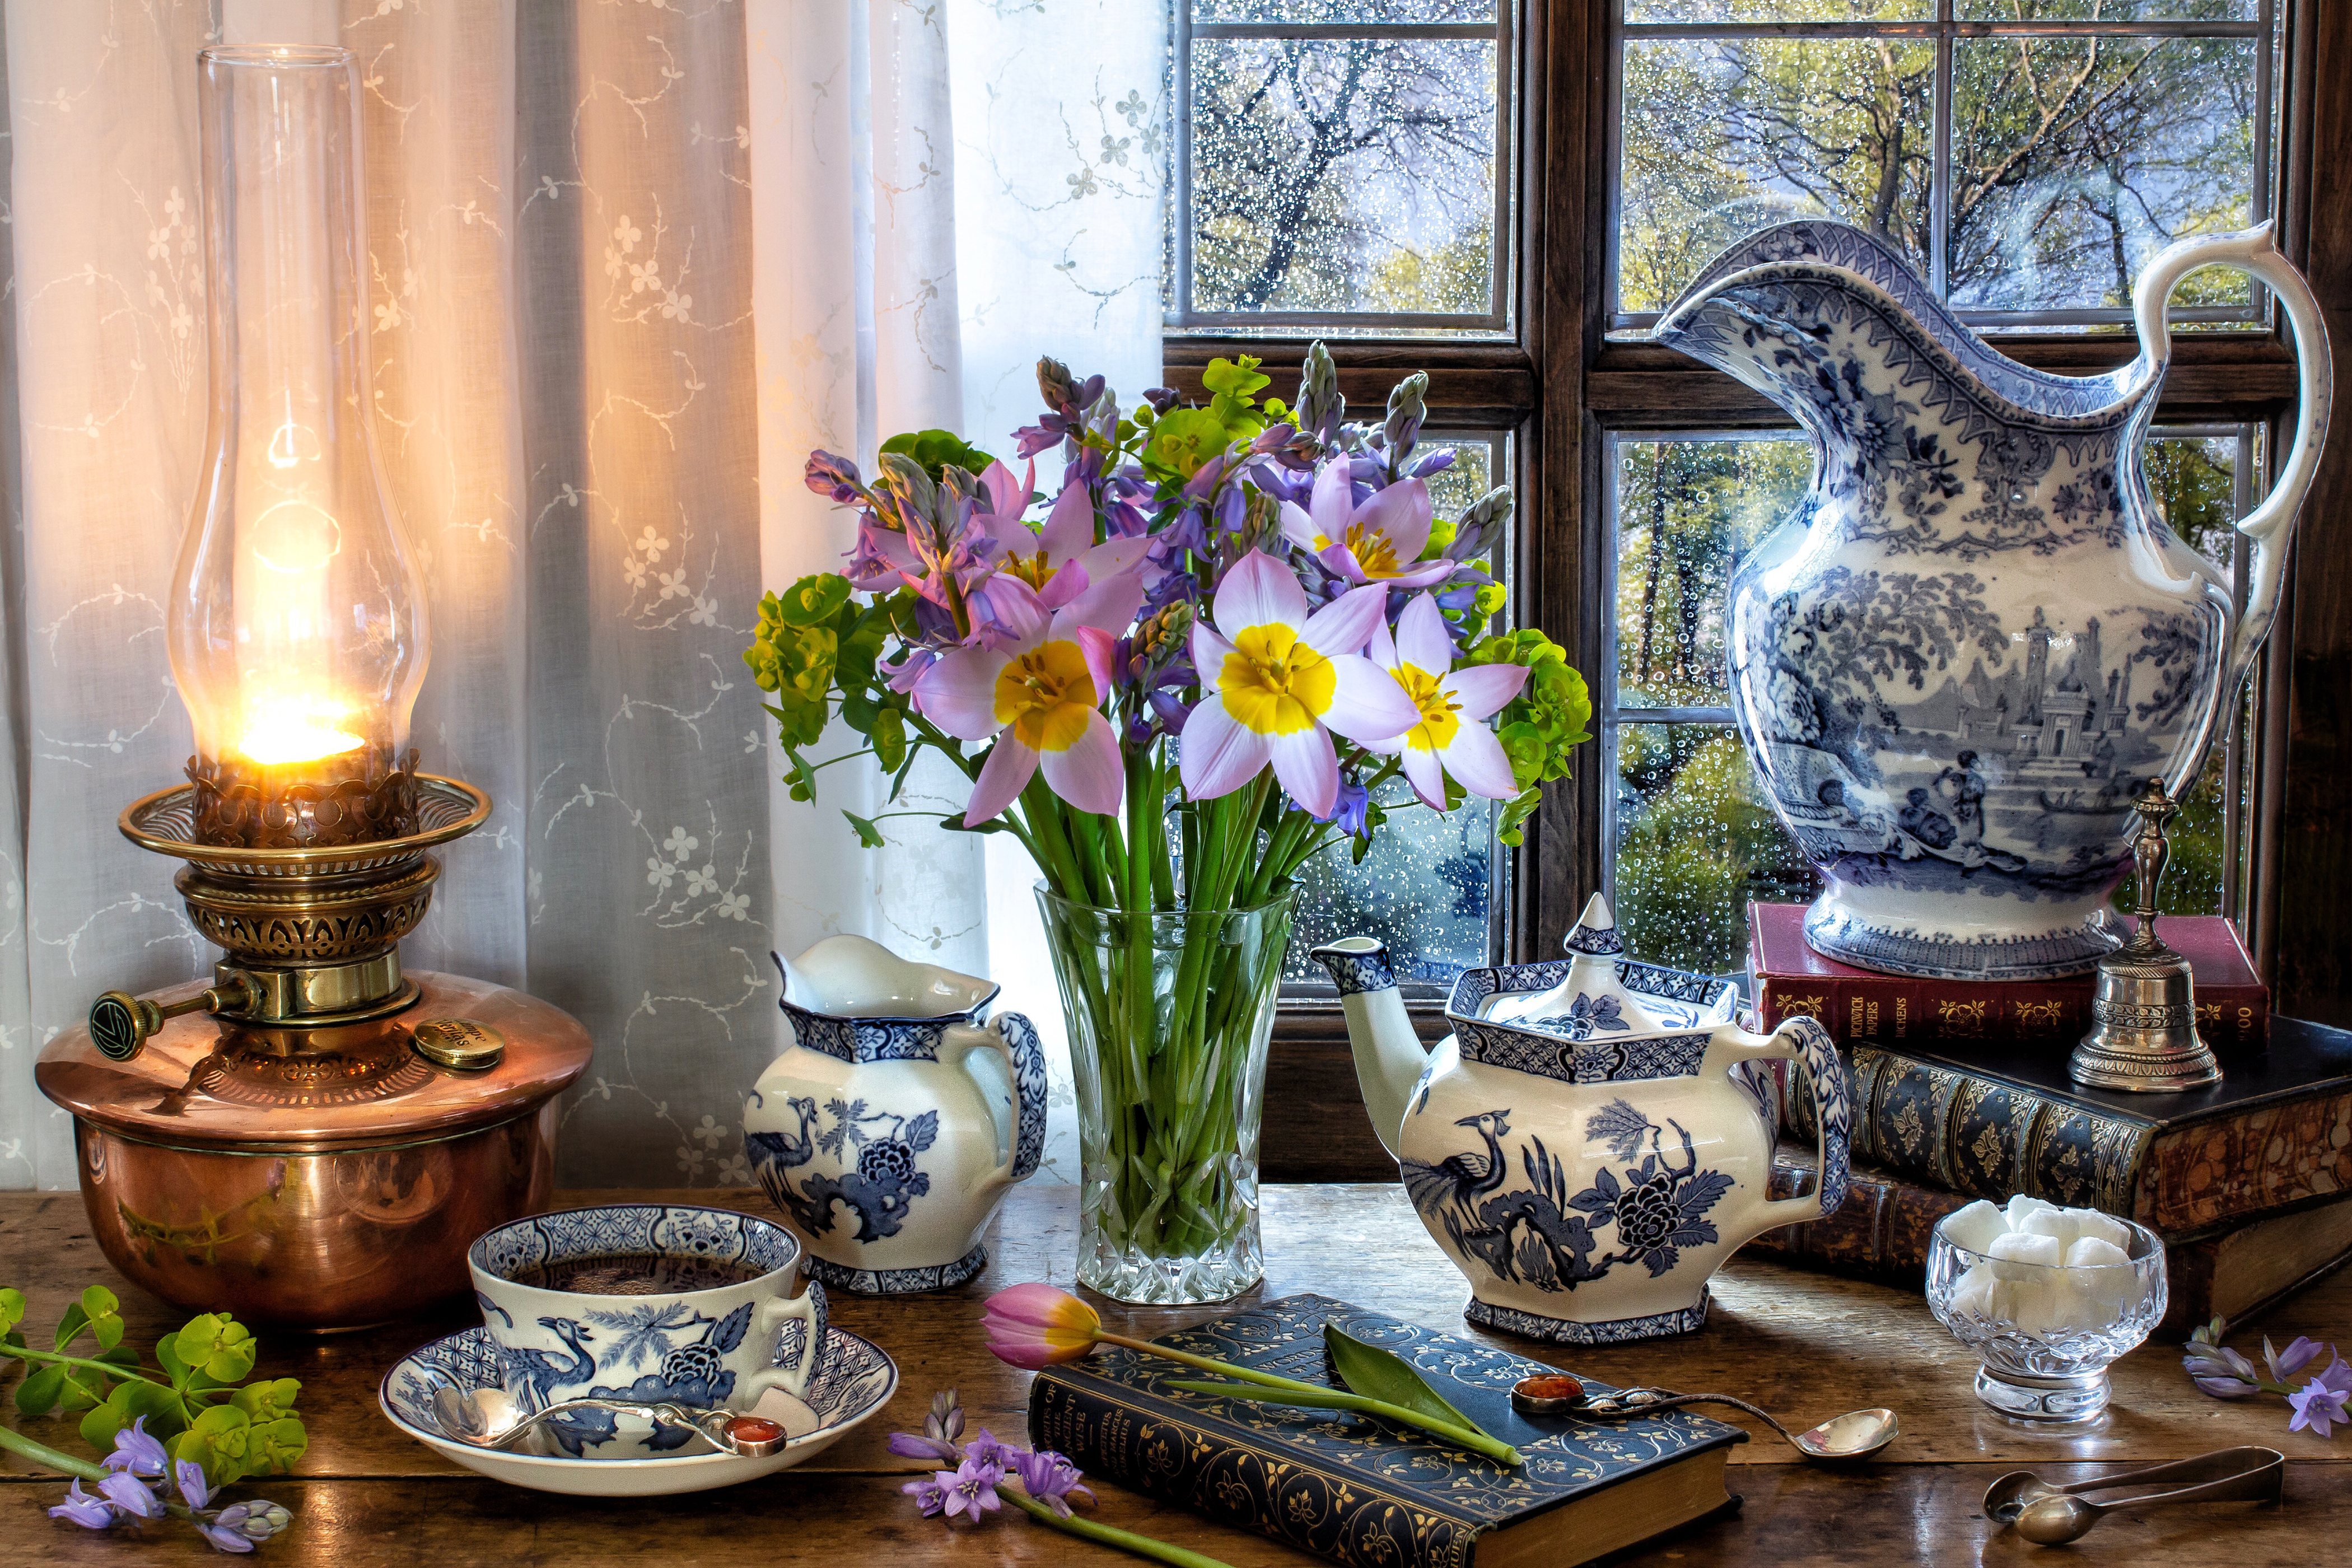 photography, still life, book, flower, kerosene lamp, teacup, teapot, vase, window iphone wallpaper